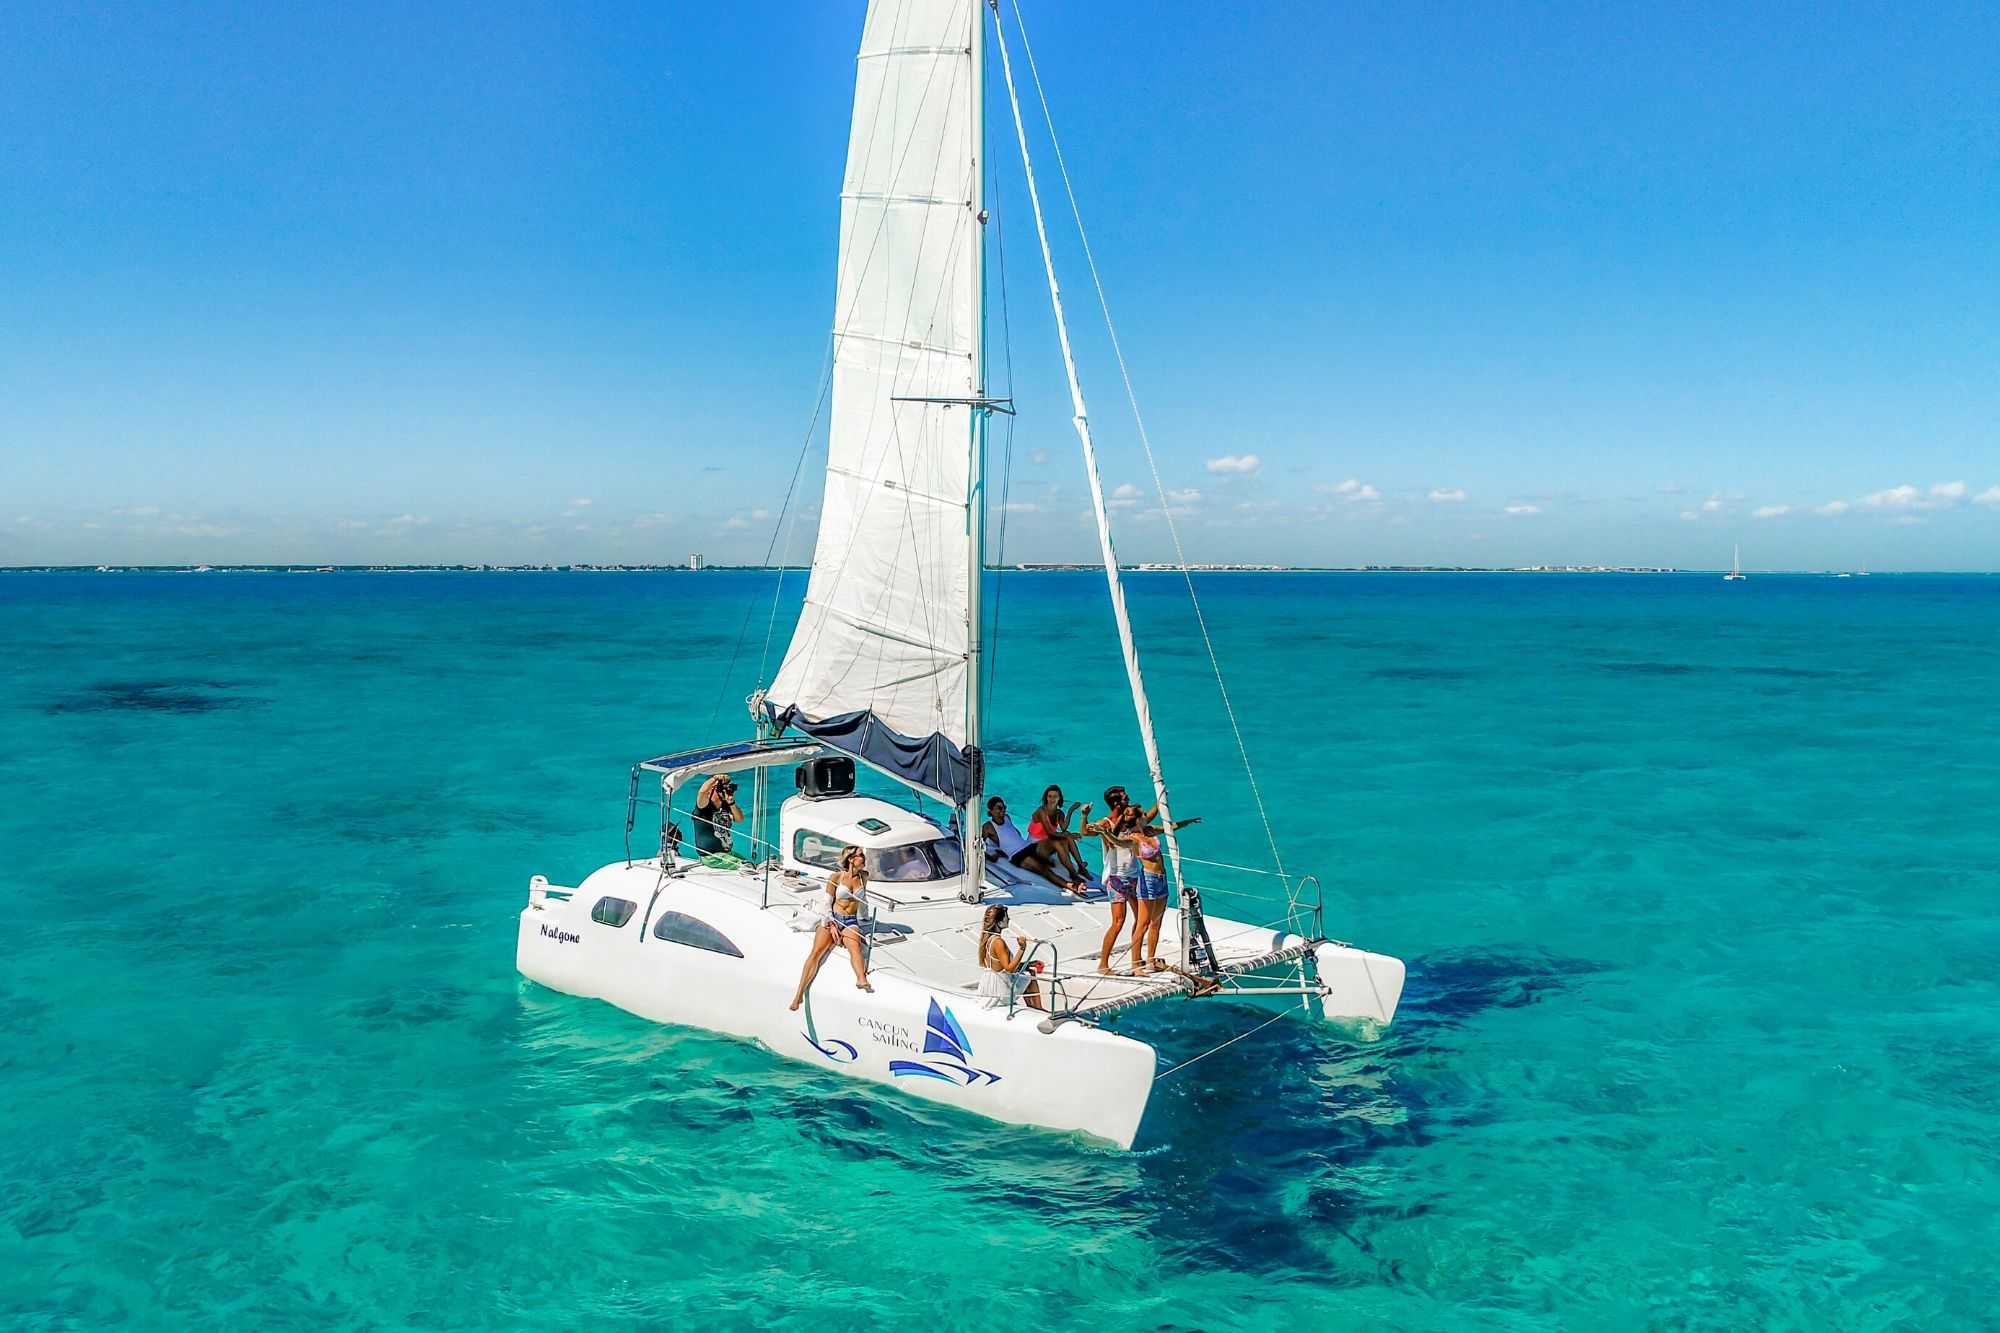 viaje en catamaran de cancun a isla mujeres